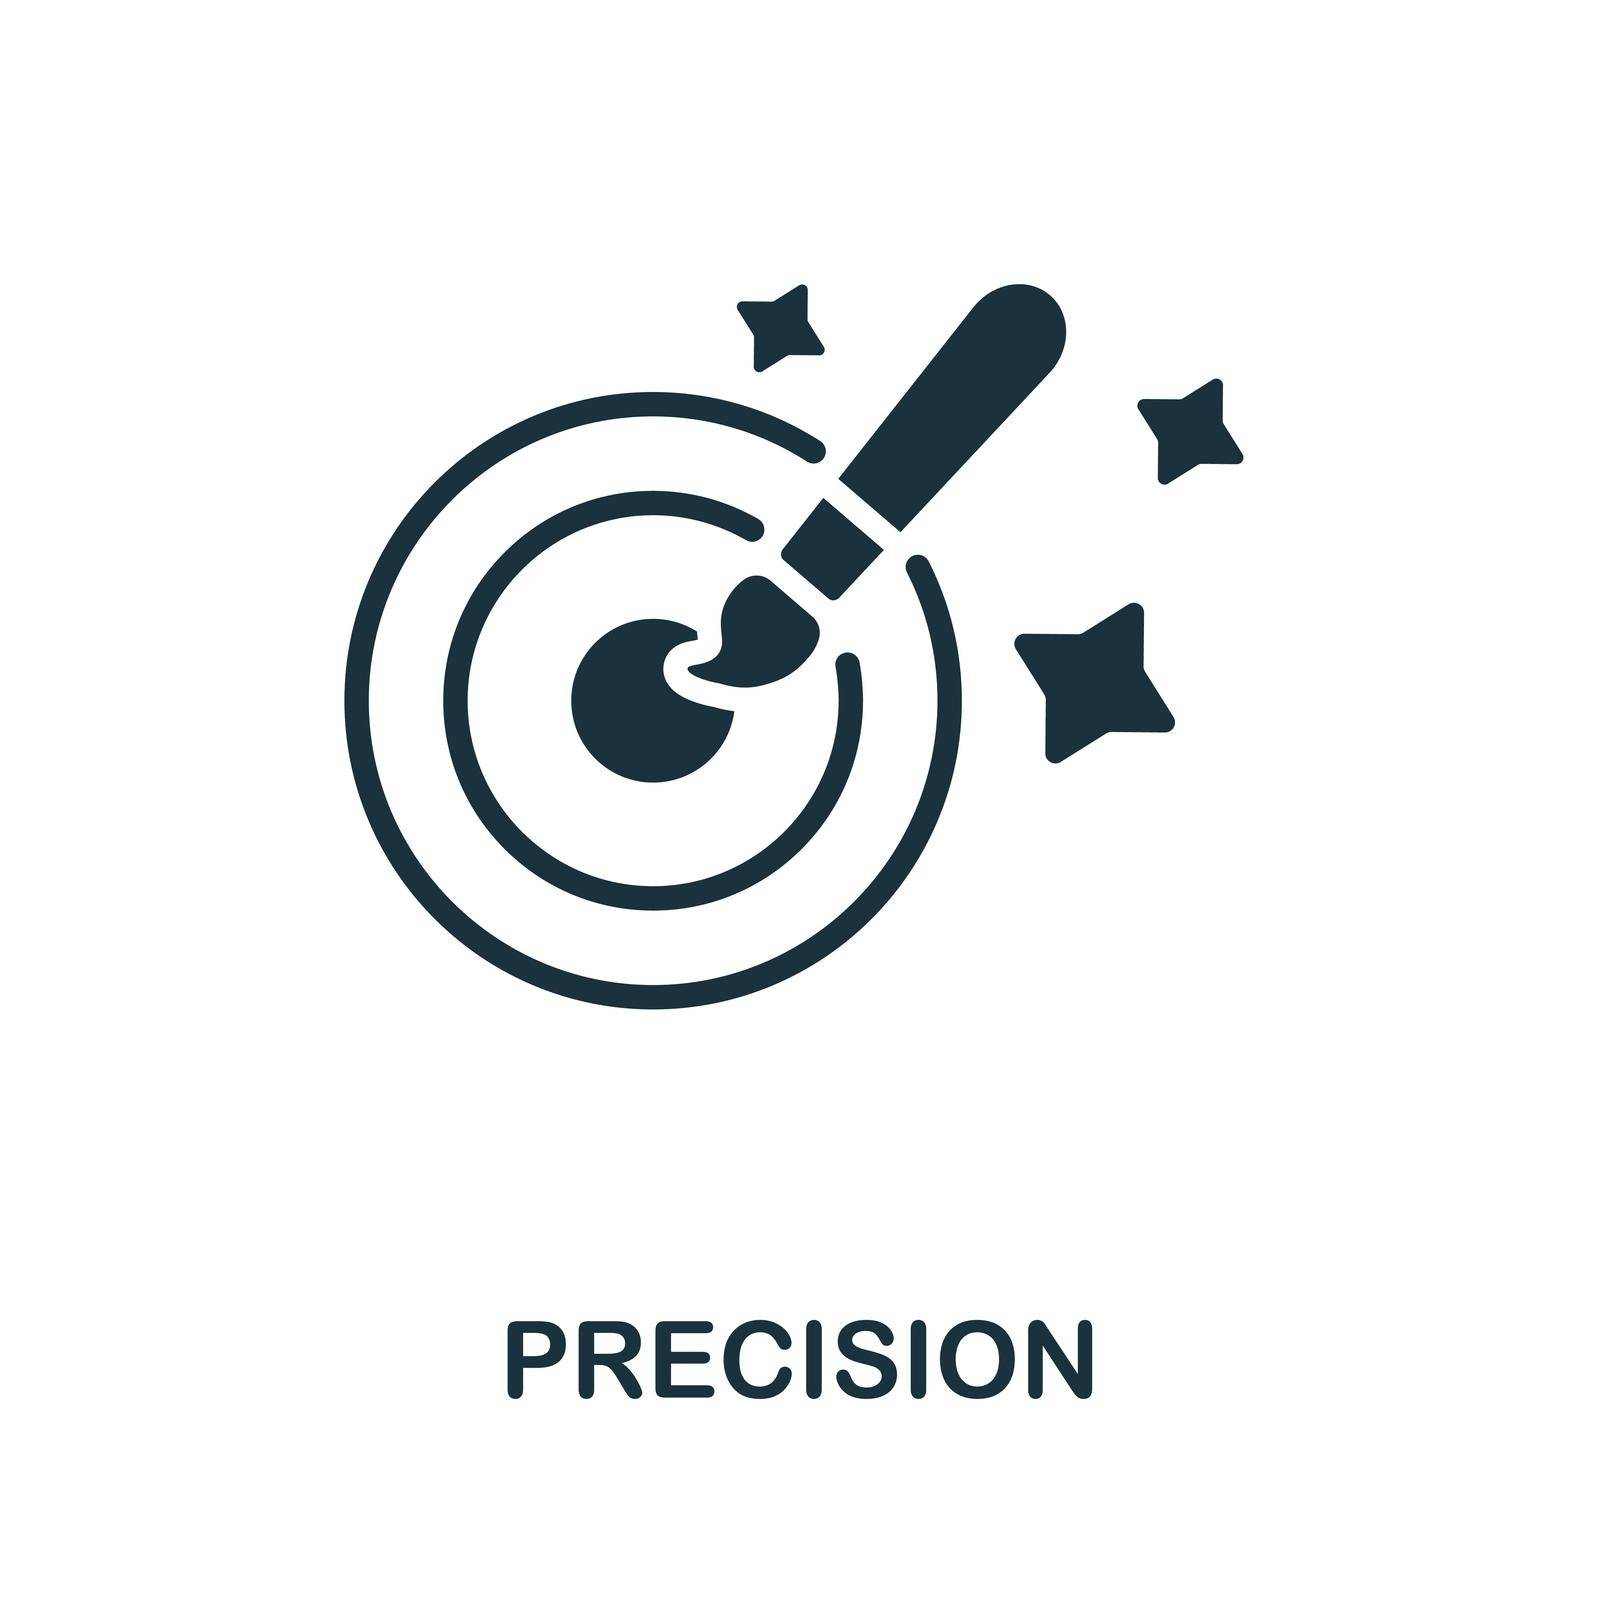 Precision icon. Monochrome sign from graphic design collection. Creative Precision icon illustration for web design, infographics and more by simakovavector